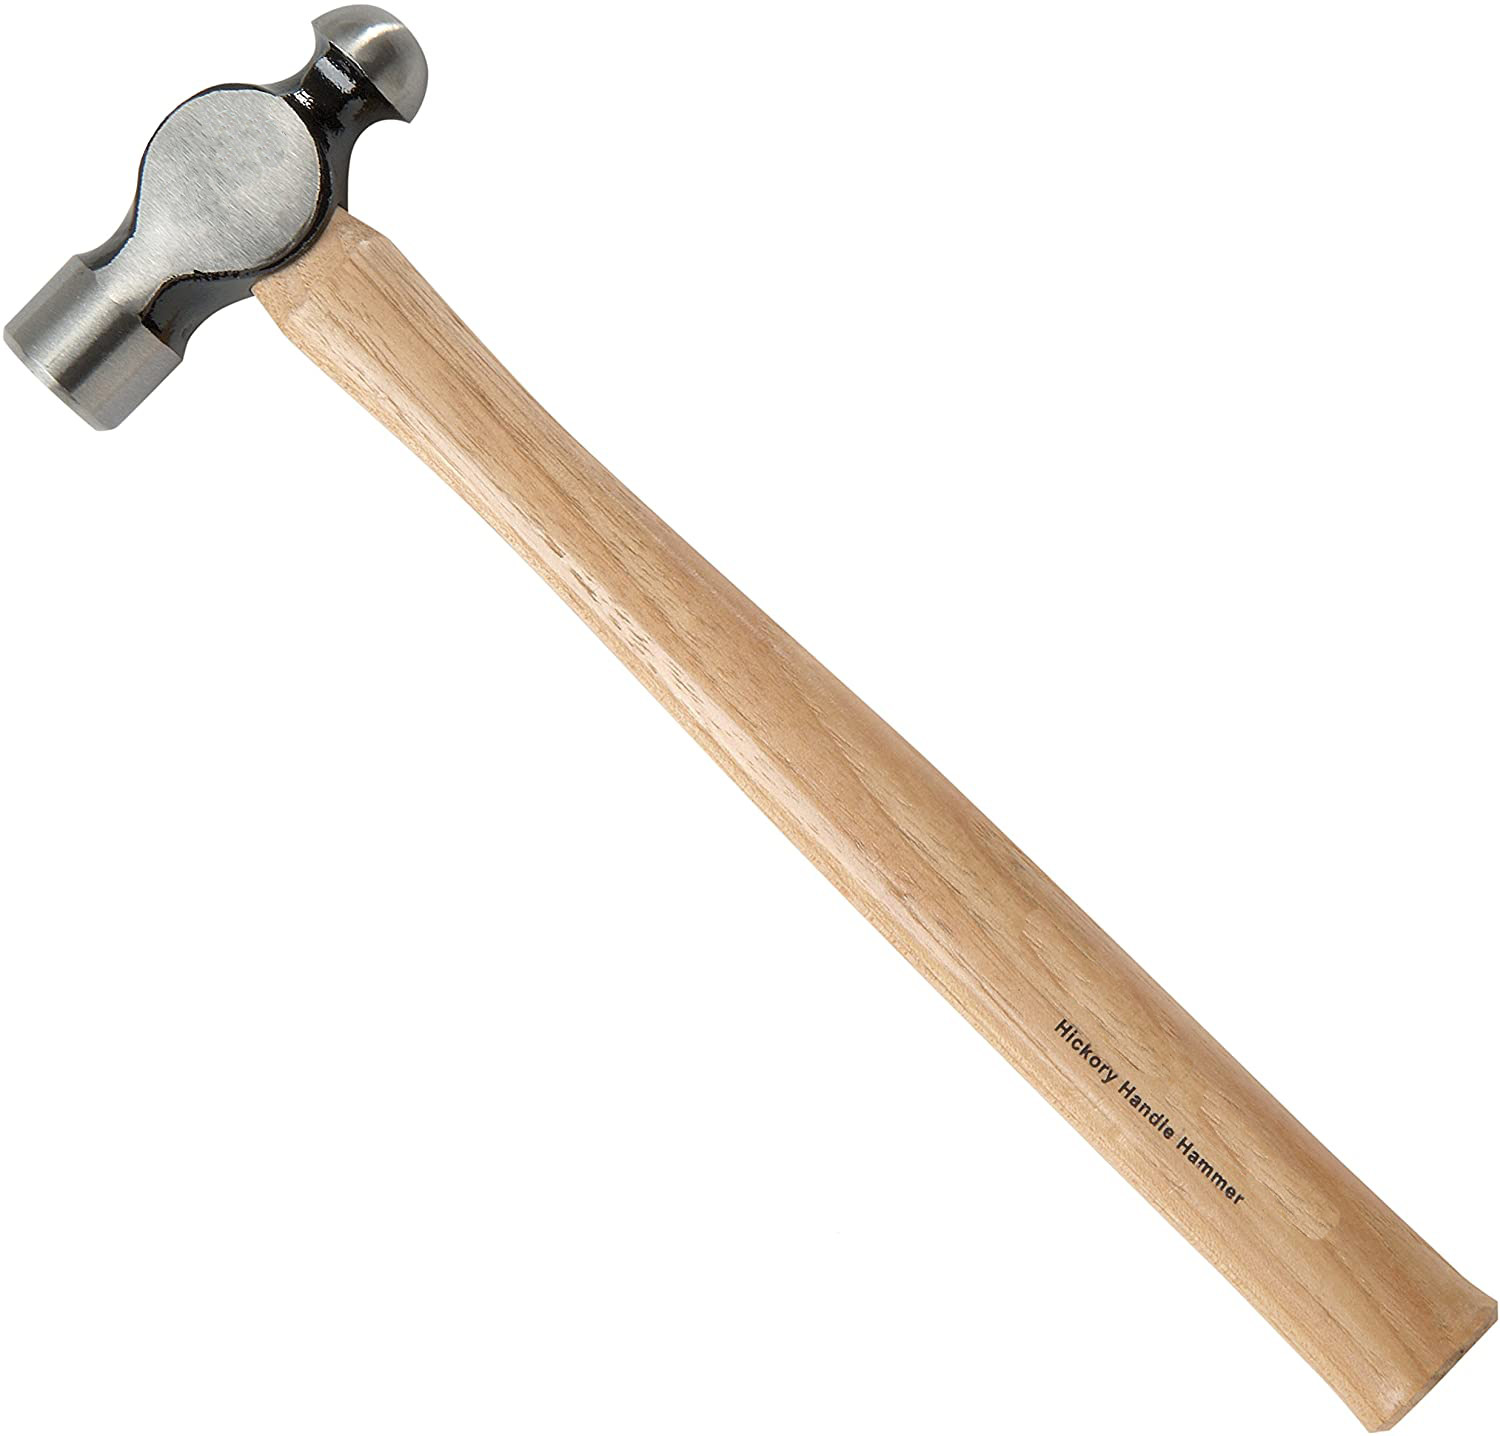 8OZ Ball Peen Hammer with wood handle